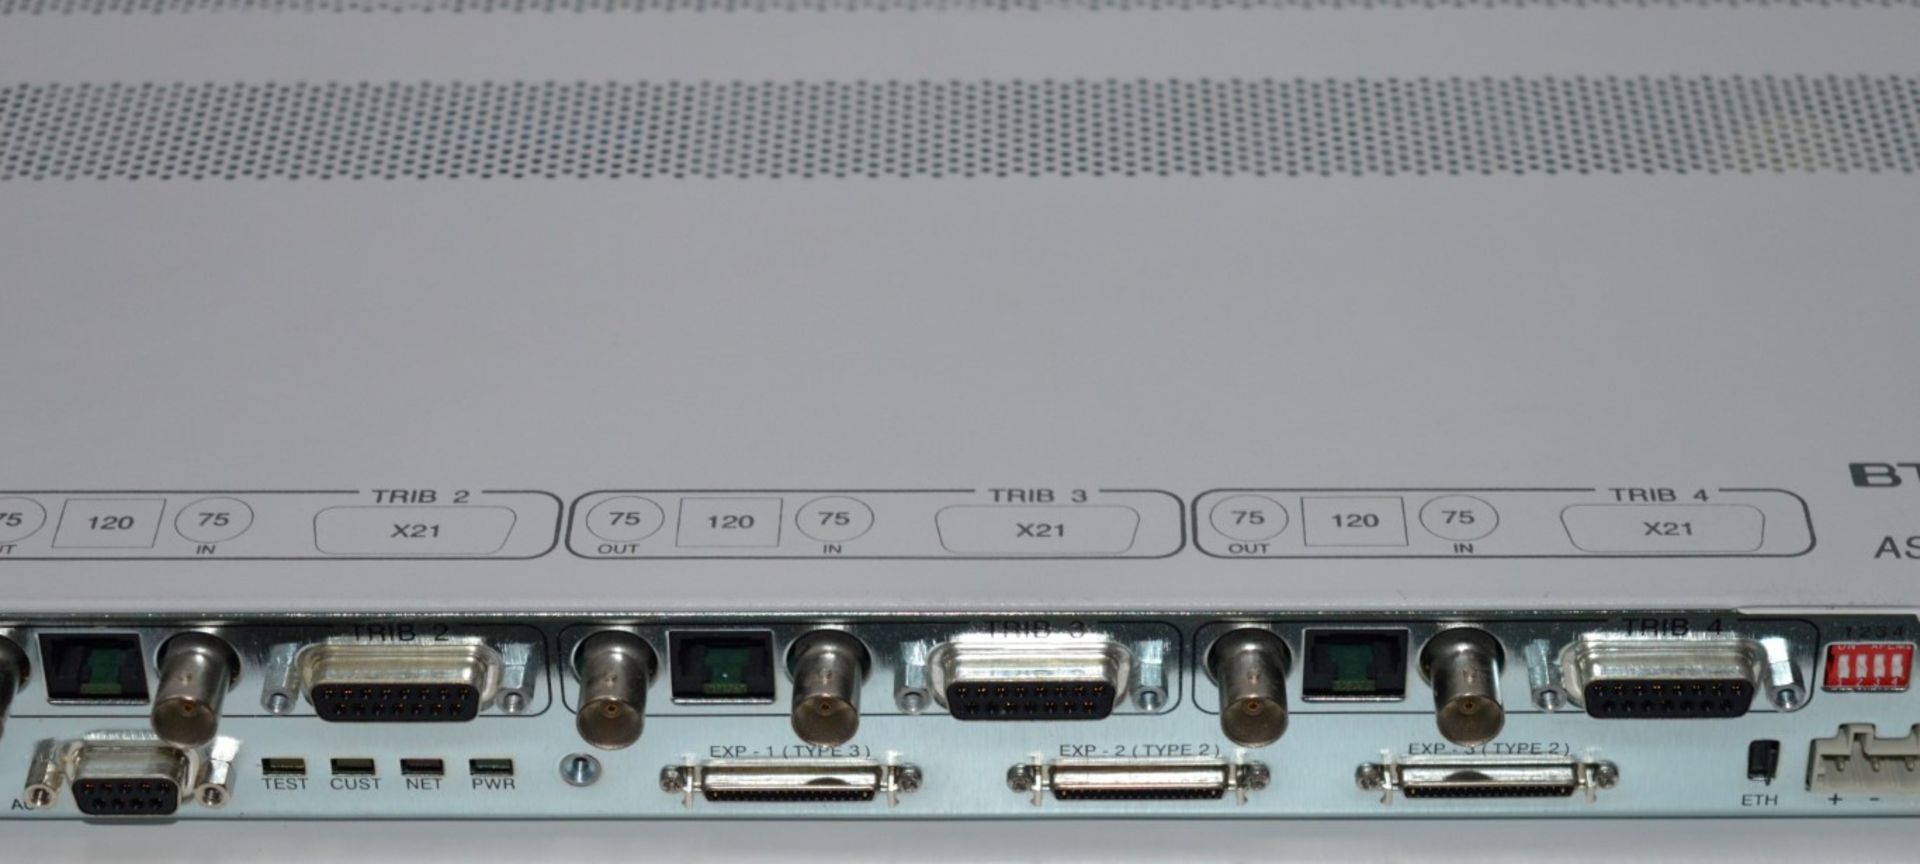 1 x BT ASDH NTE 4U/7A Access SDH Network Terminating Unit - CL300 - Ref PC022 - Location: Altrincham - Image 8 of 8